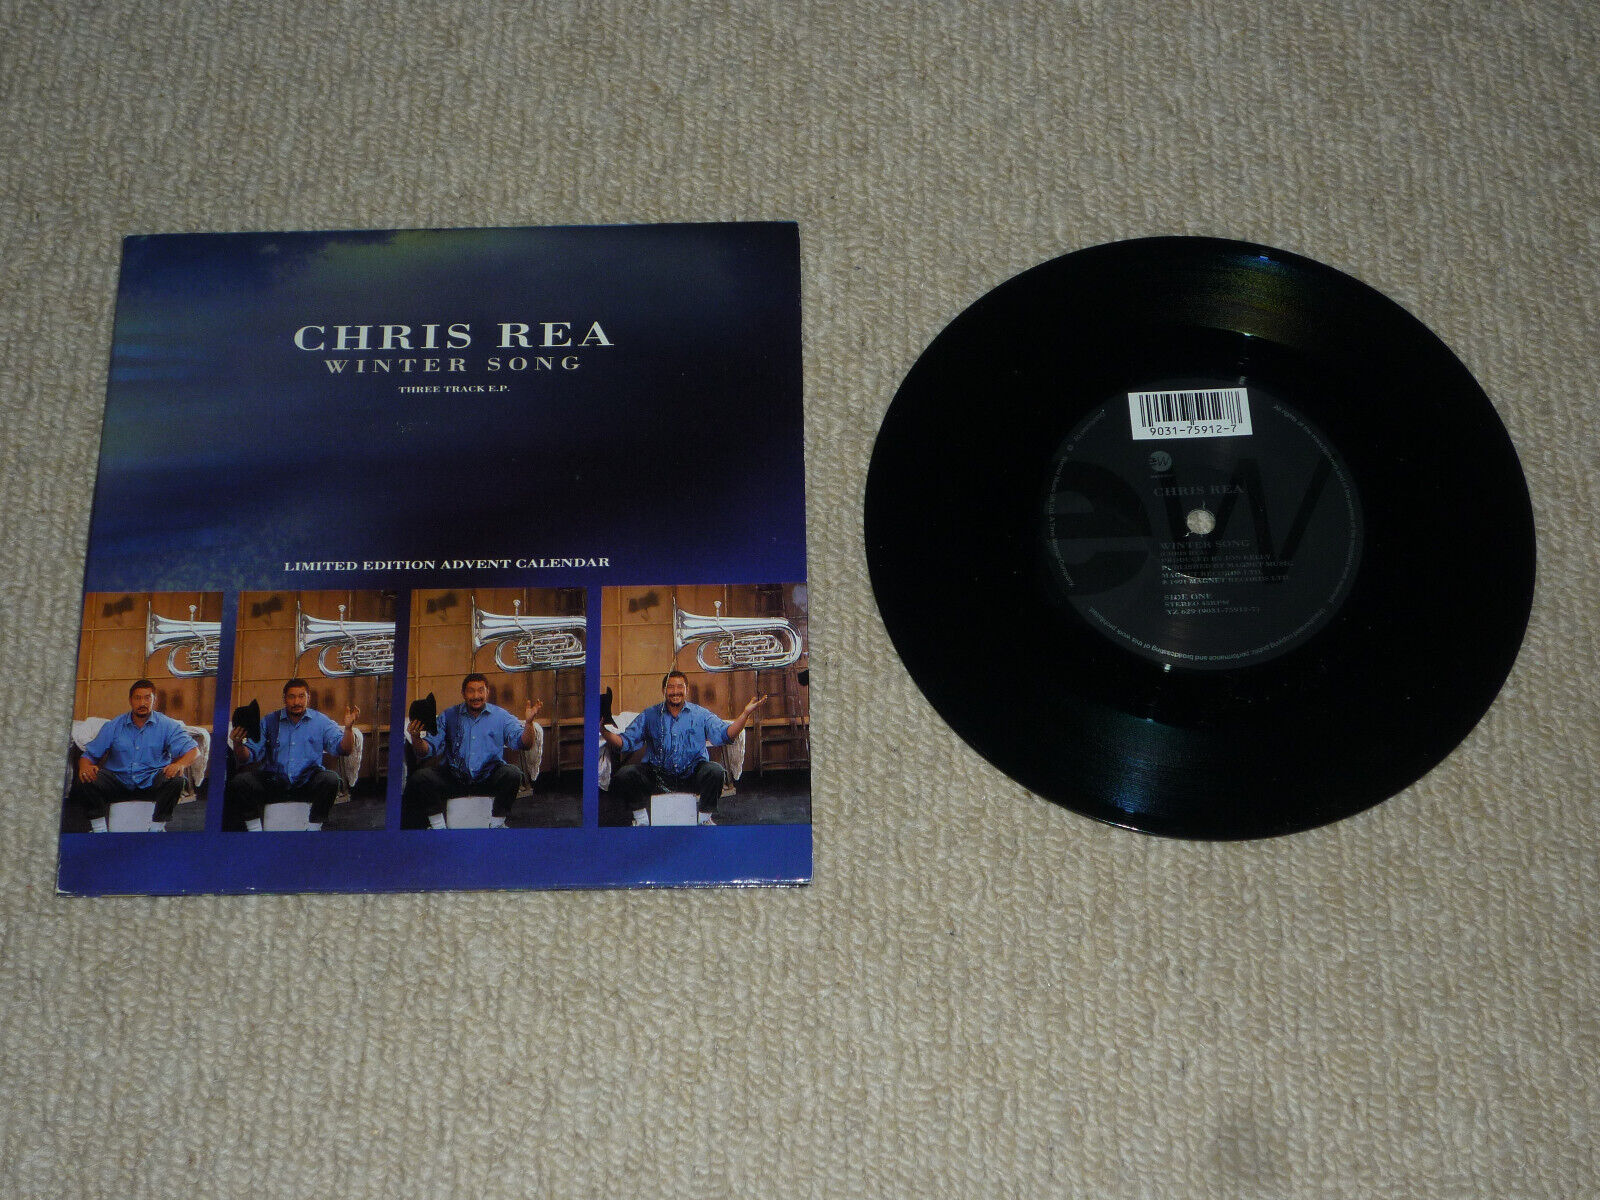 CHRIS REA WINTER SONG 7" INCH SINGLE 3-TRACK EP VINYL RECORD ADVENT CALENDAR NM+